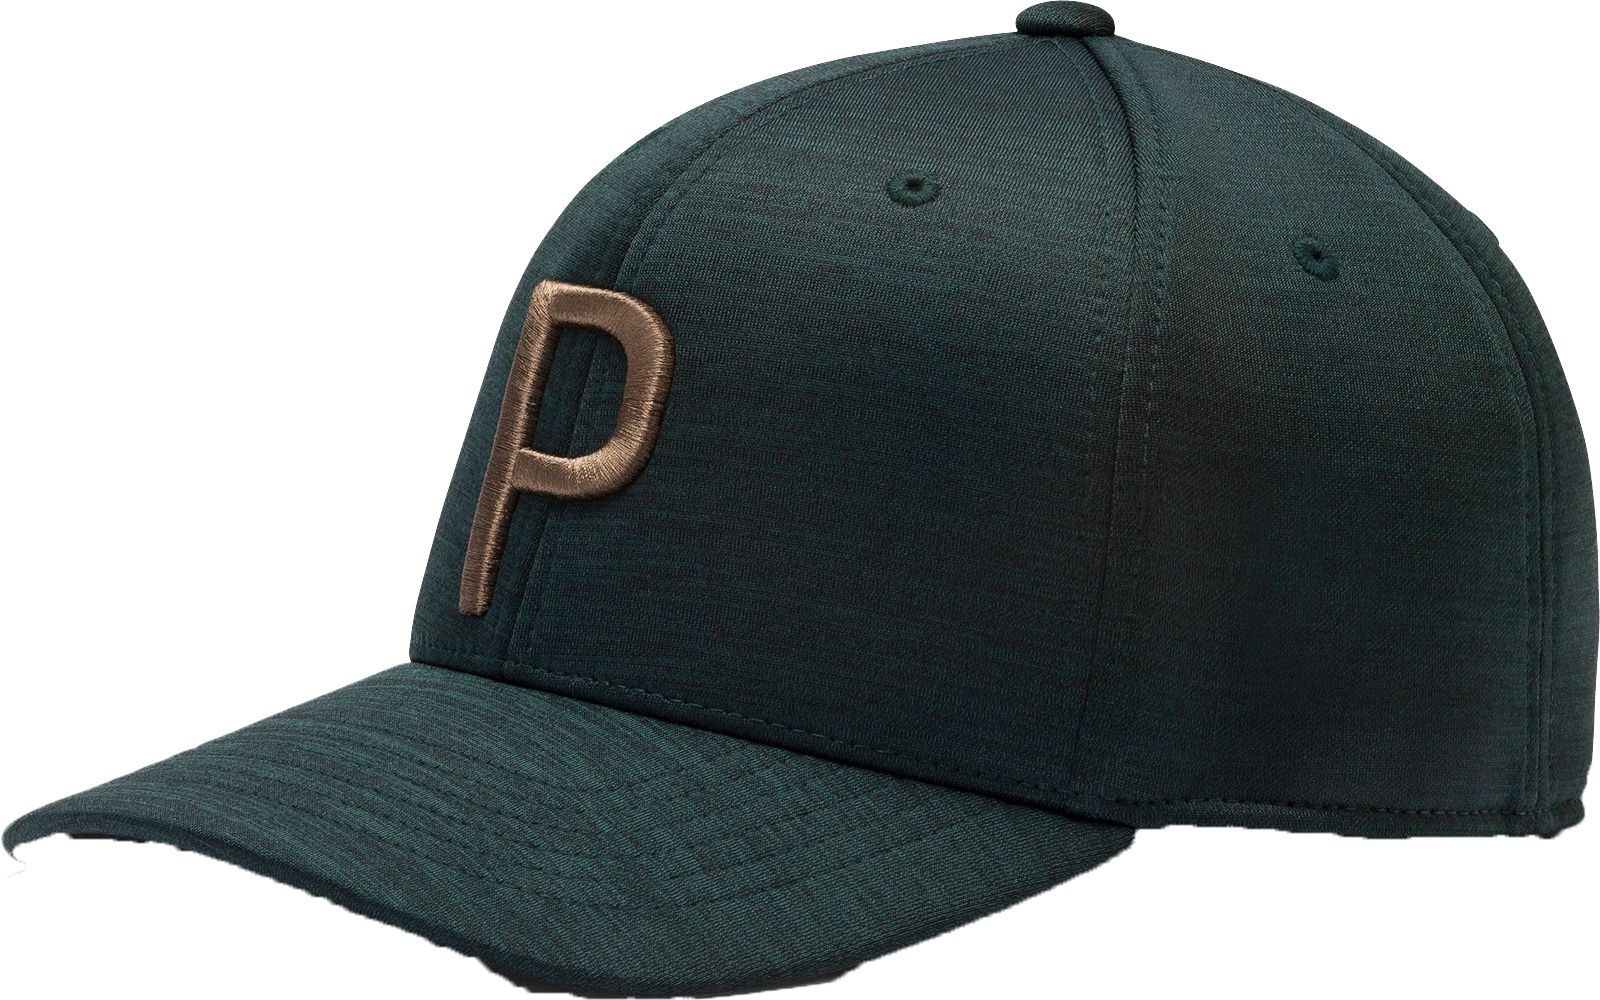 puma snapback hats